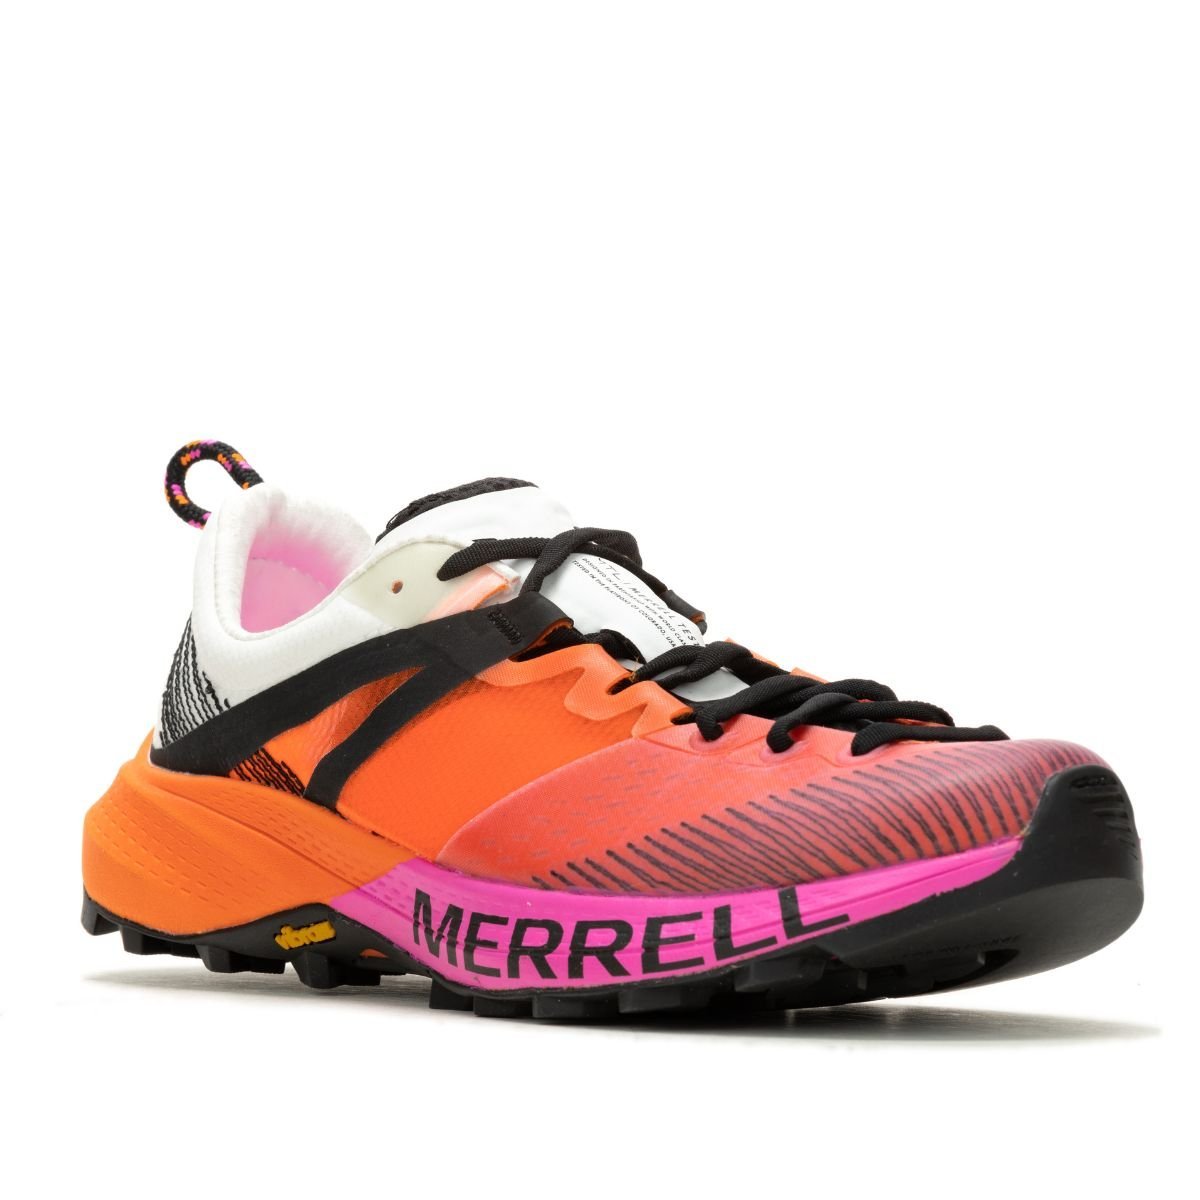 Topánky Merrell J038048 MTL MQM W - oranžová